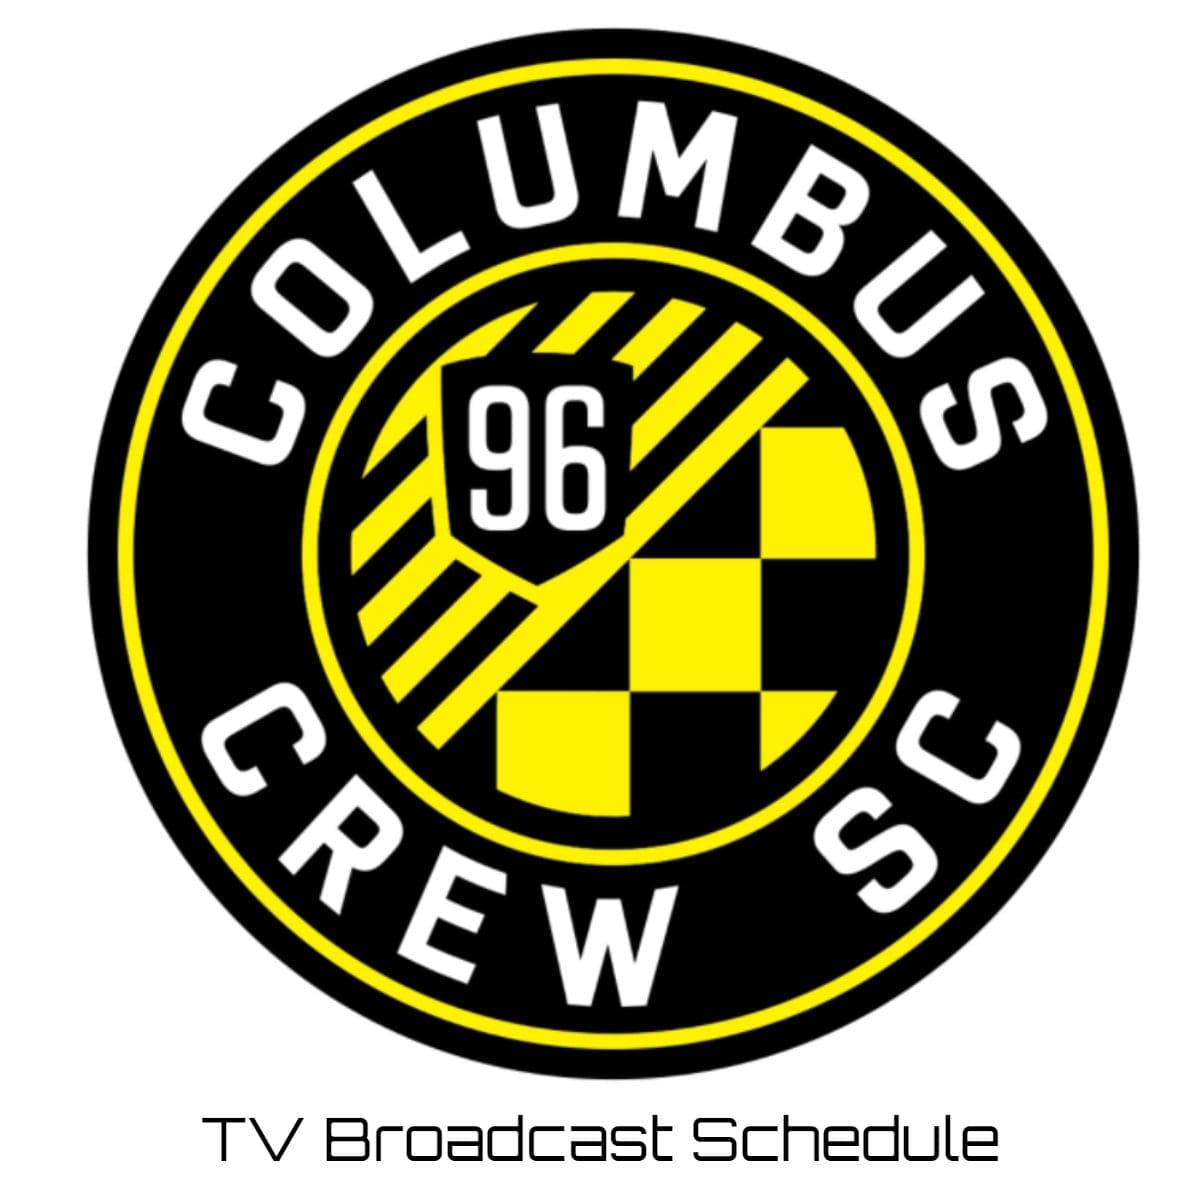 Columbus Crew TV Broadcast Schedule